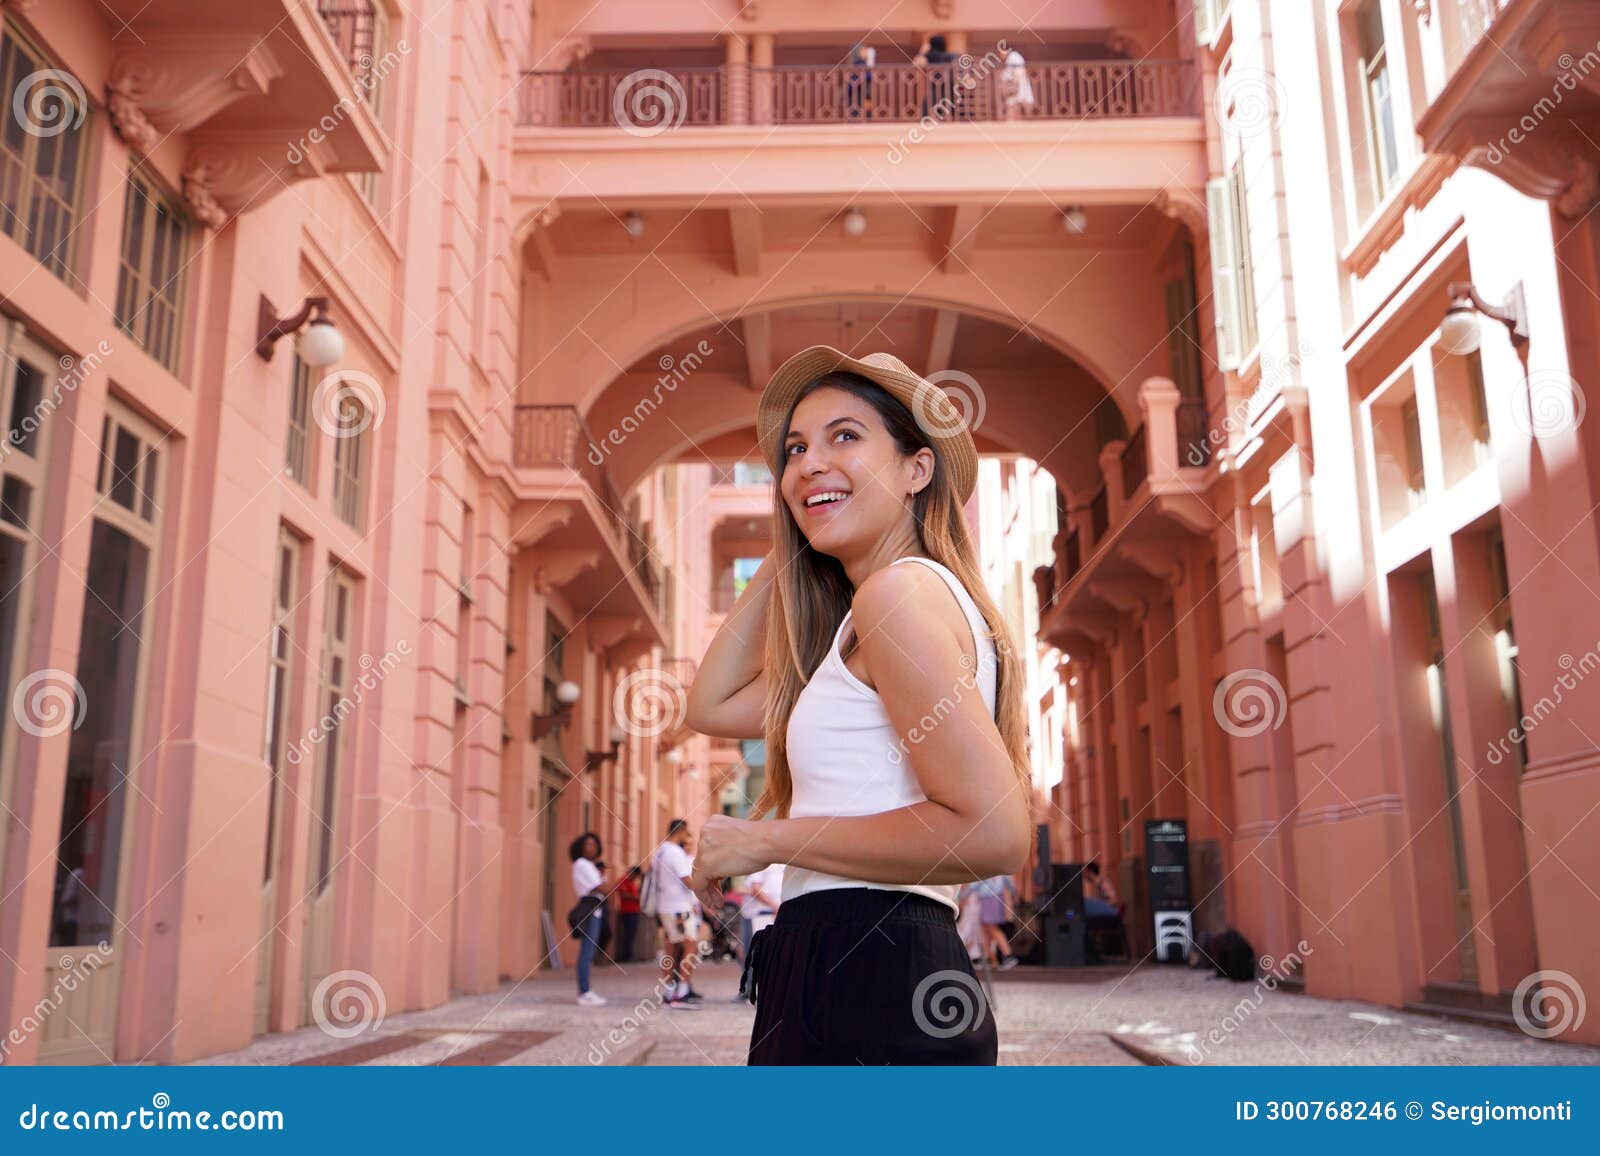 portrait of young woman visiting the historic palace casa de cultura mario quintana in porto alegre, brazil